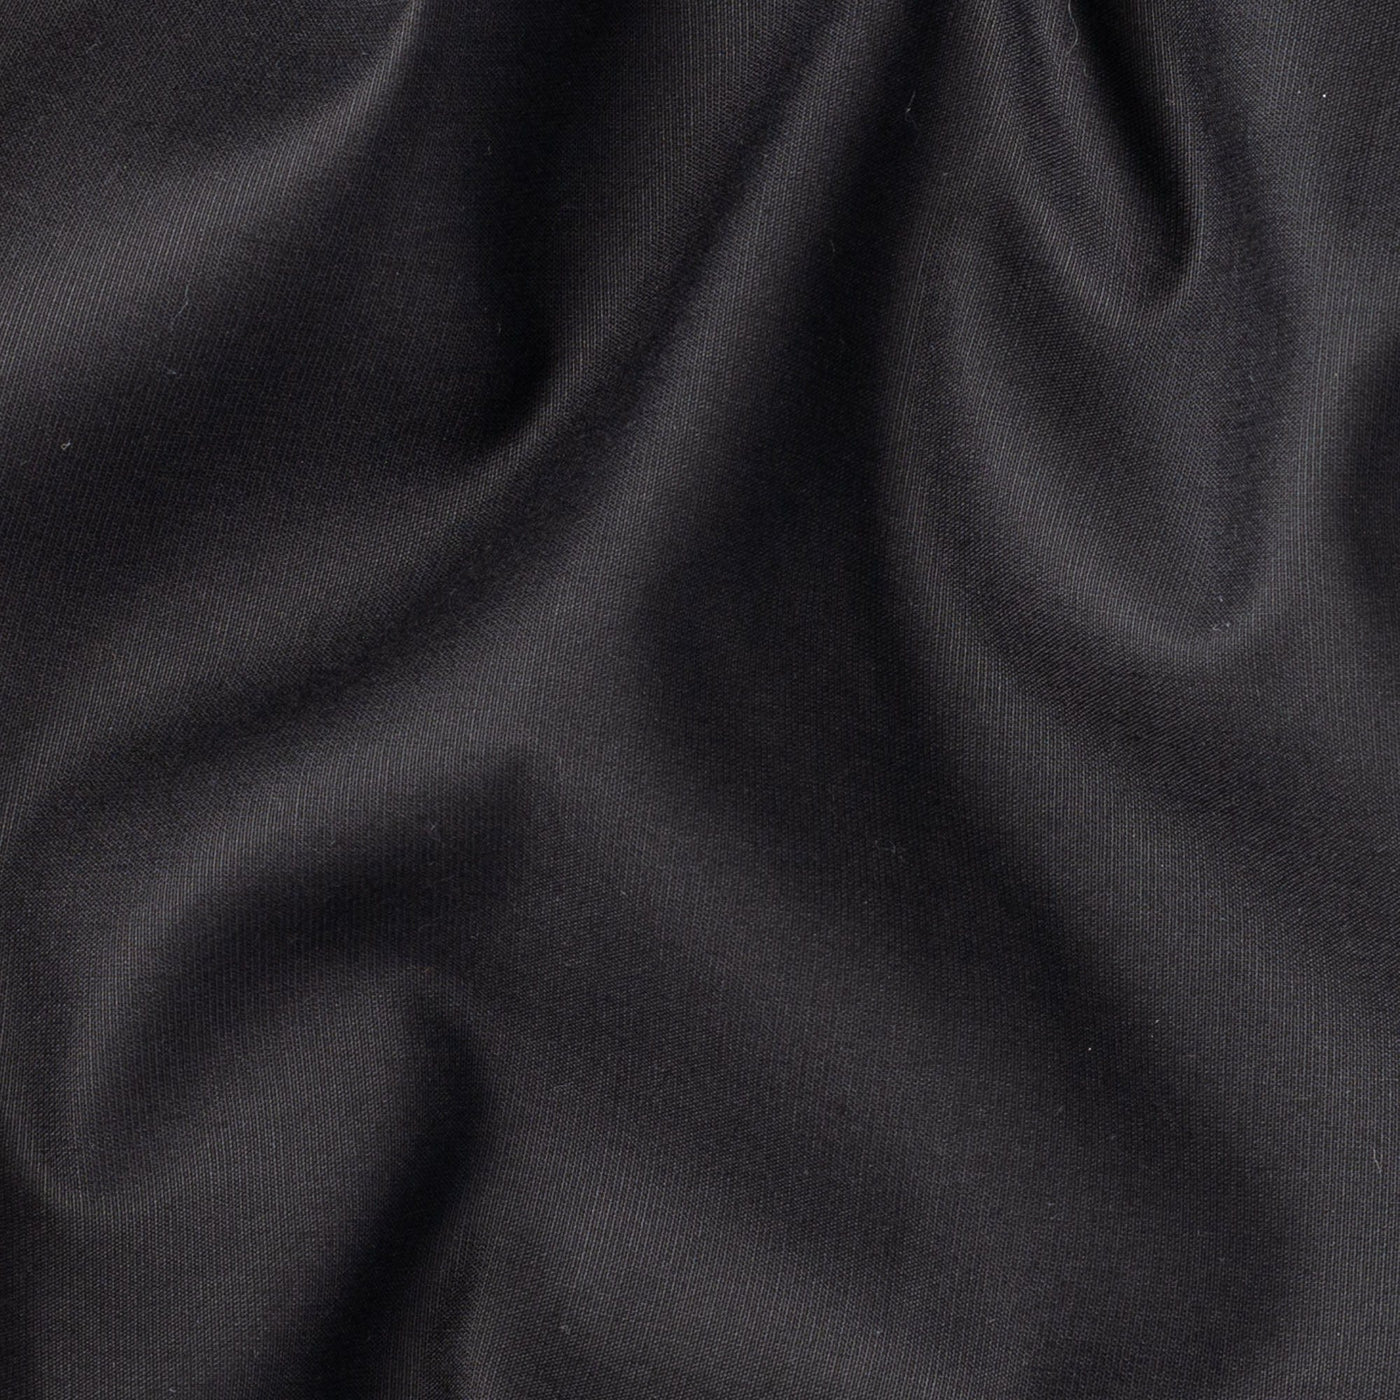 Fabric Pandit Shirt Jade Black Textured Cotton Unstitched Men's Shirt Piece (Width 58 inch | 1.60 Meters)